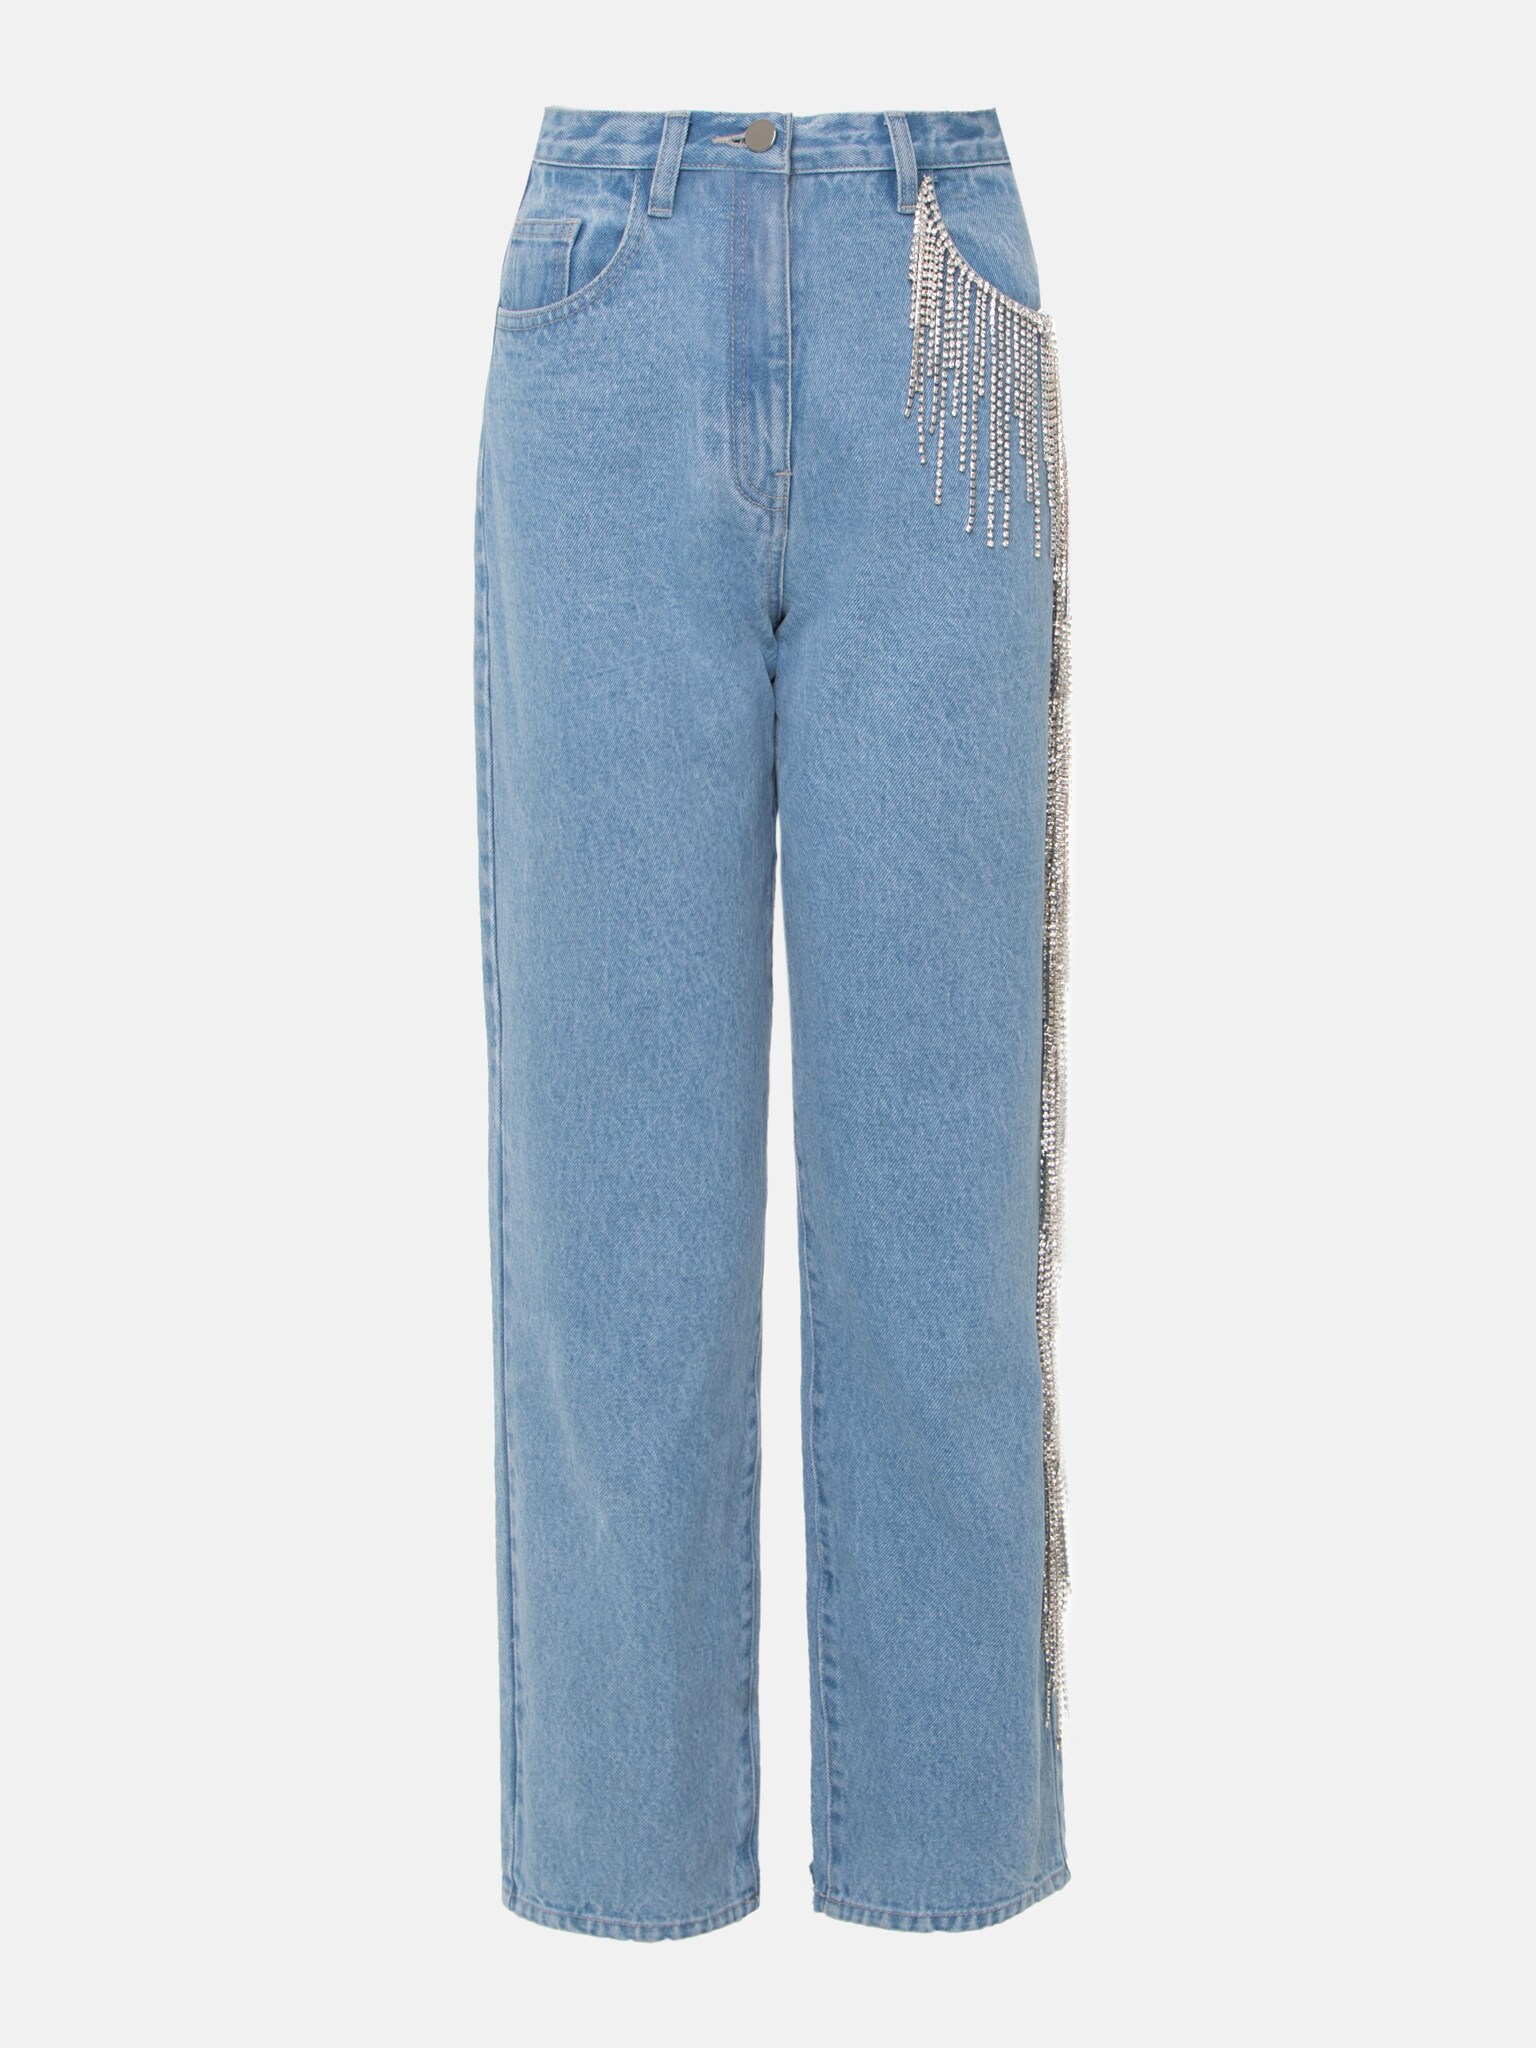 Straight-leg jeans with rhinestone fringe